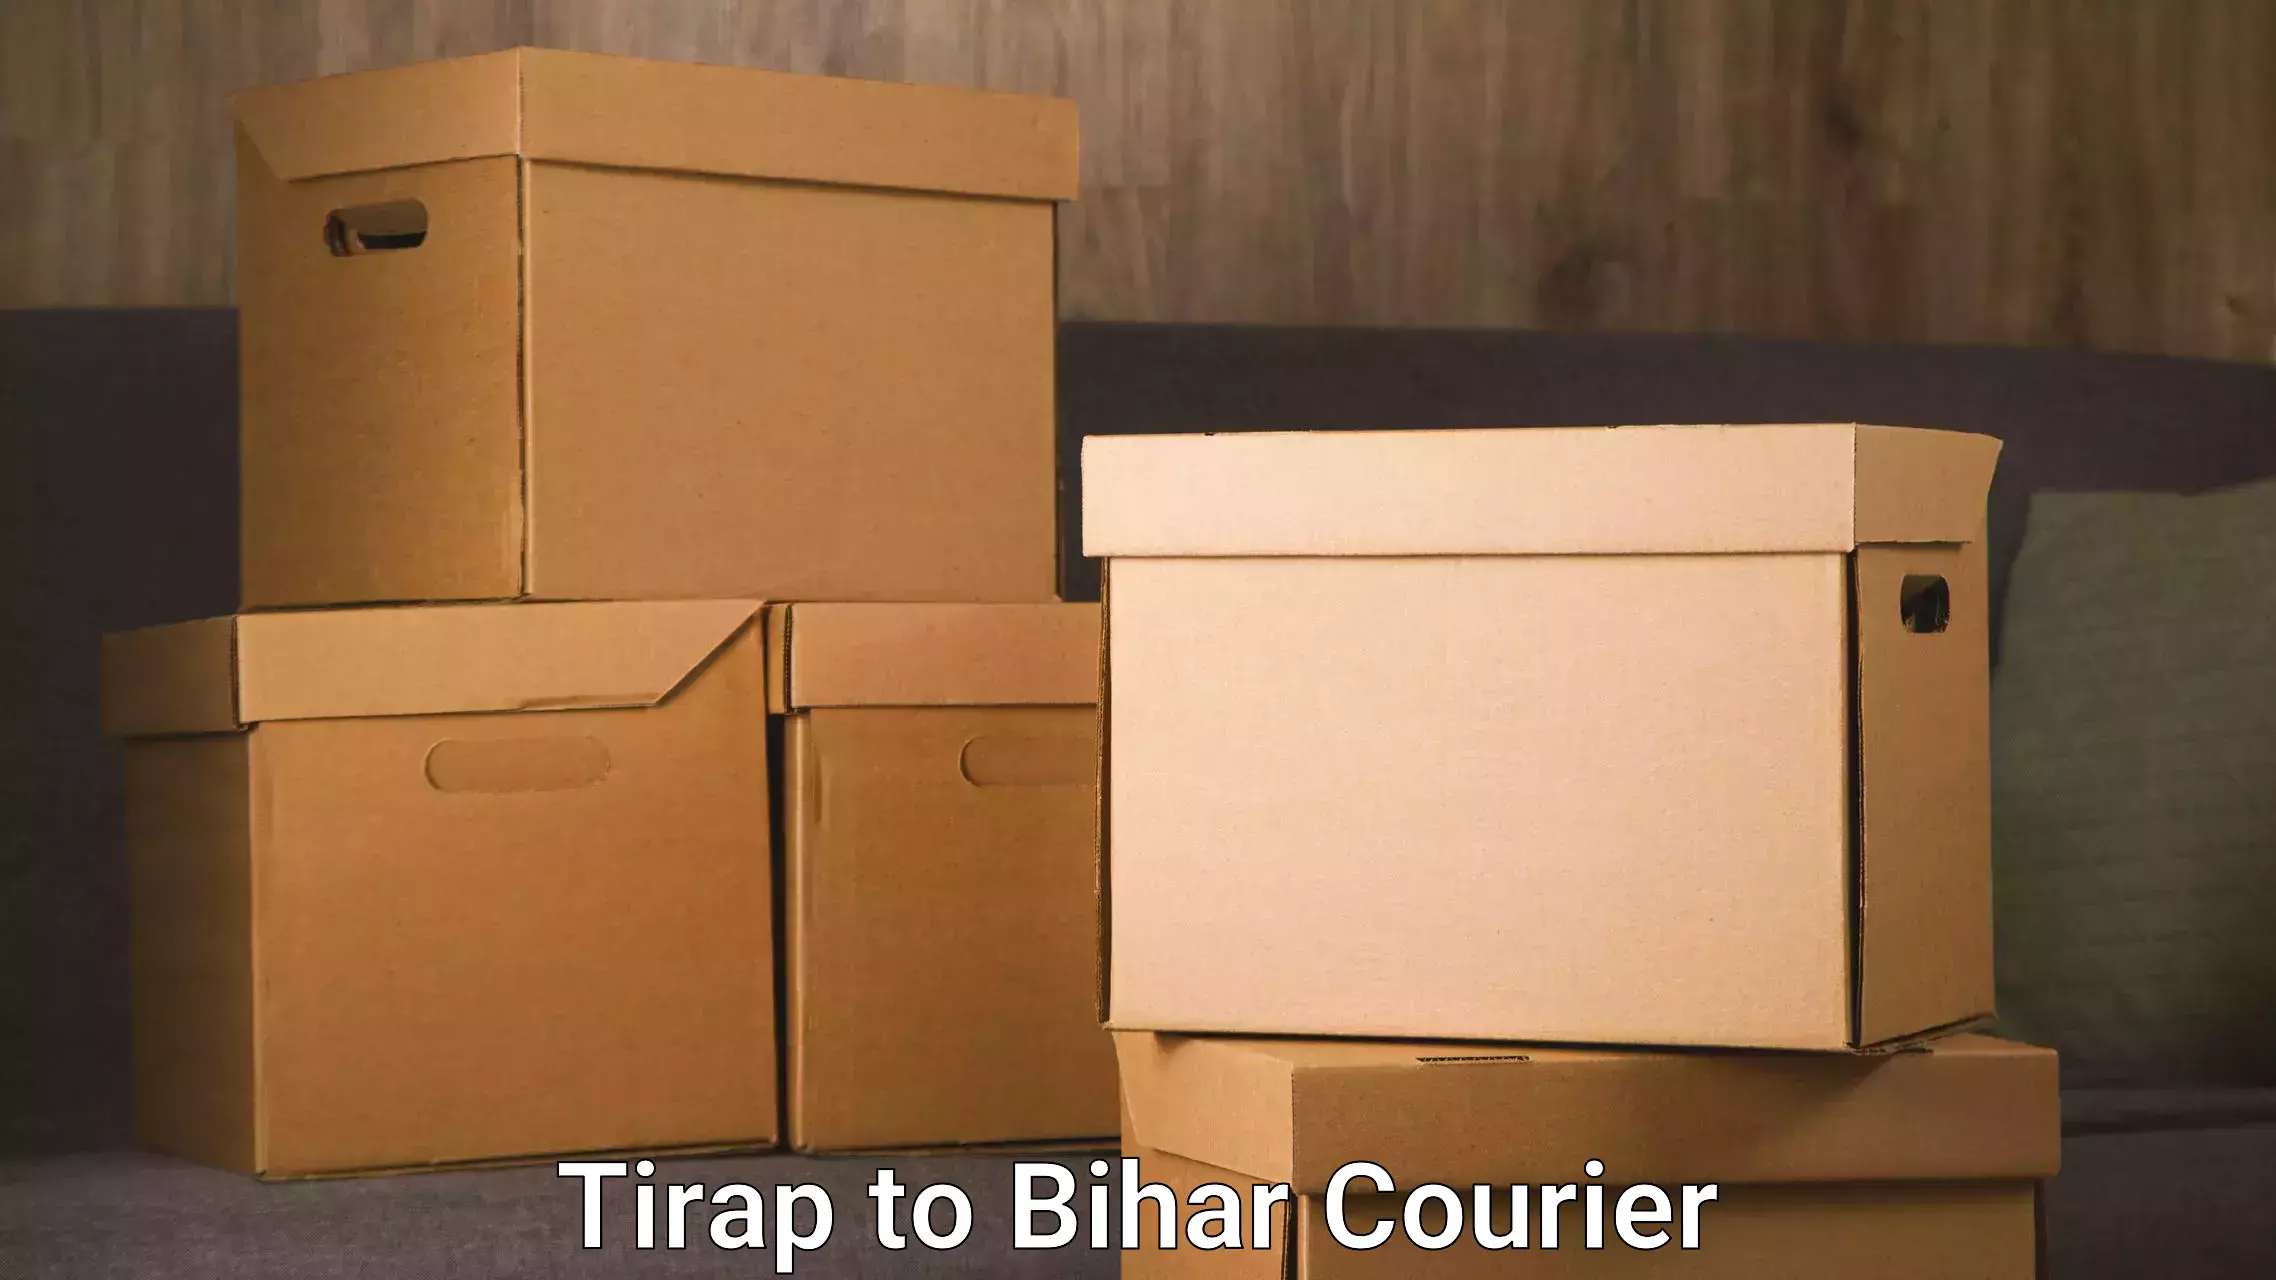 Courier service partnerships Tirap to Bihar